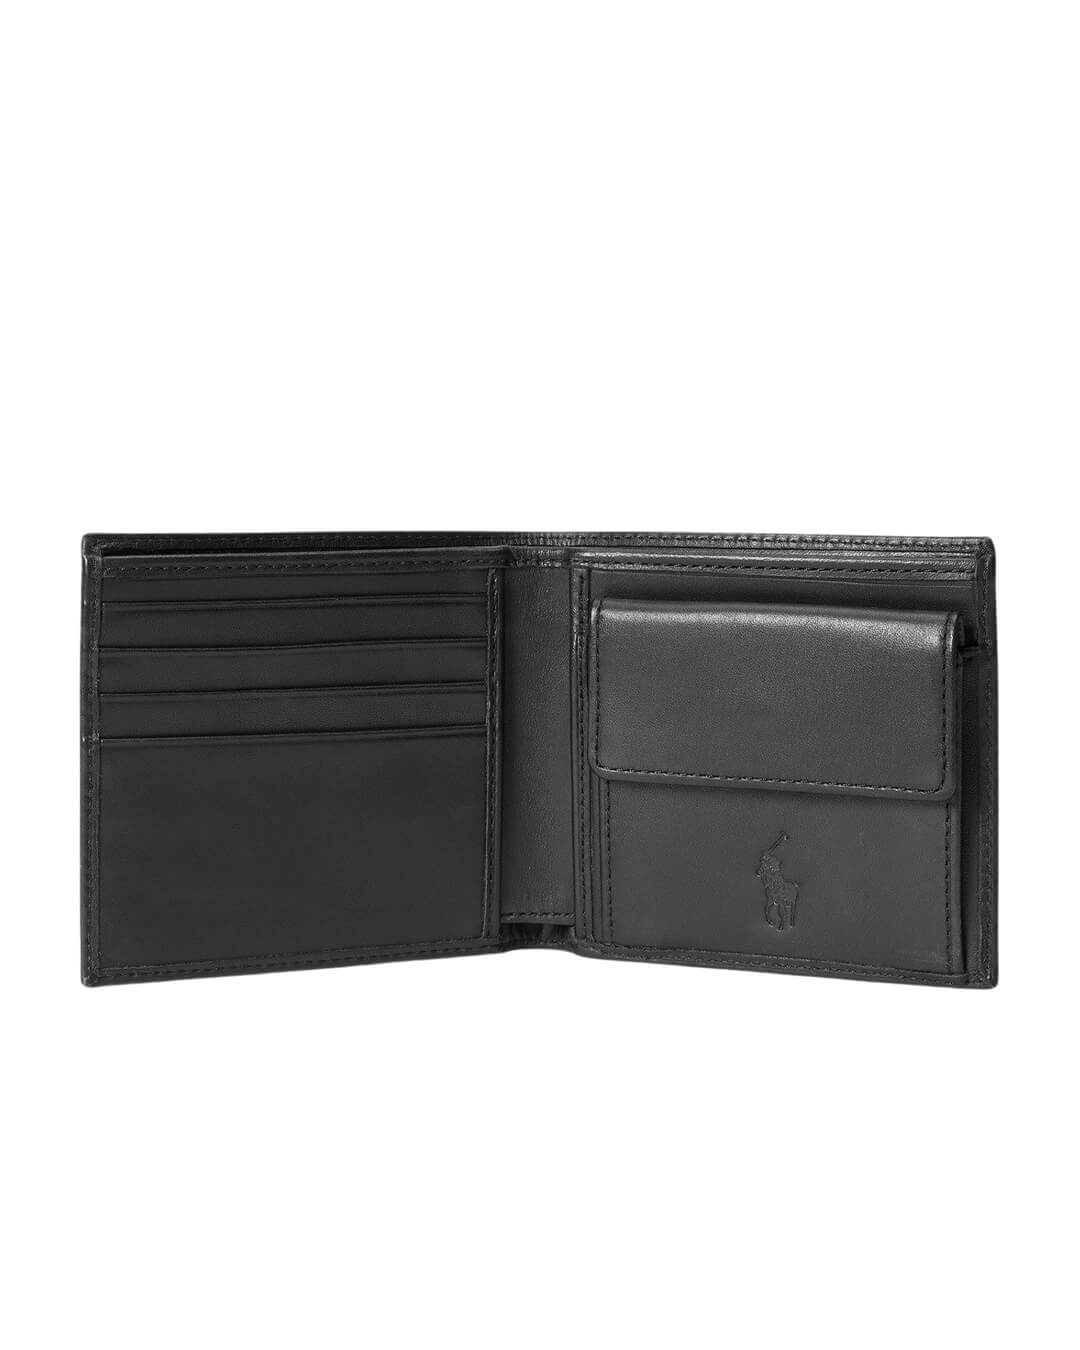 Polo Ralph Lauren Wallets ONE SIZE Polo Ralph Lauren Leather Black Billfold Wallet